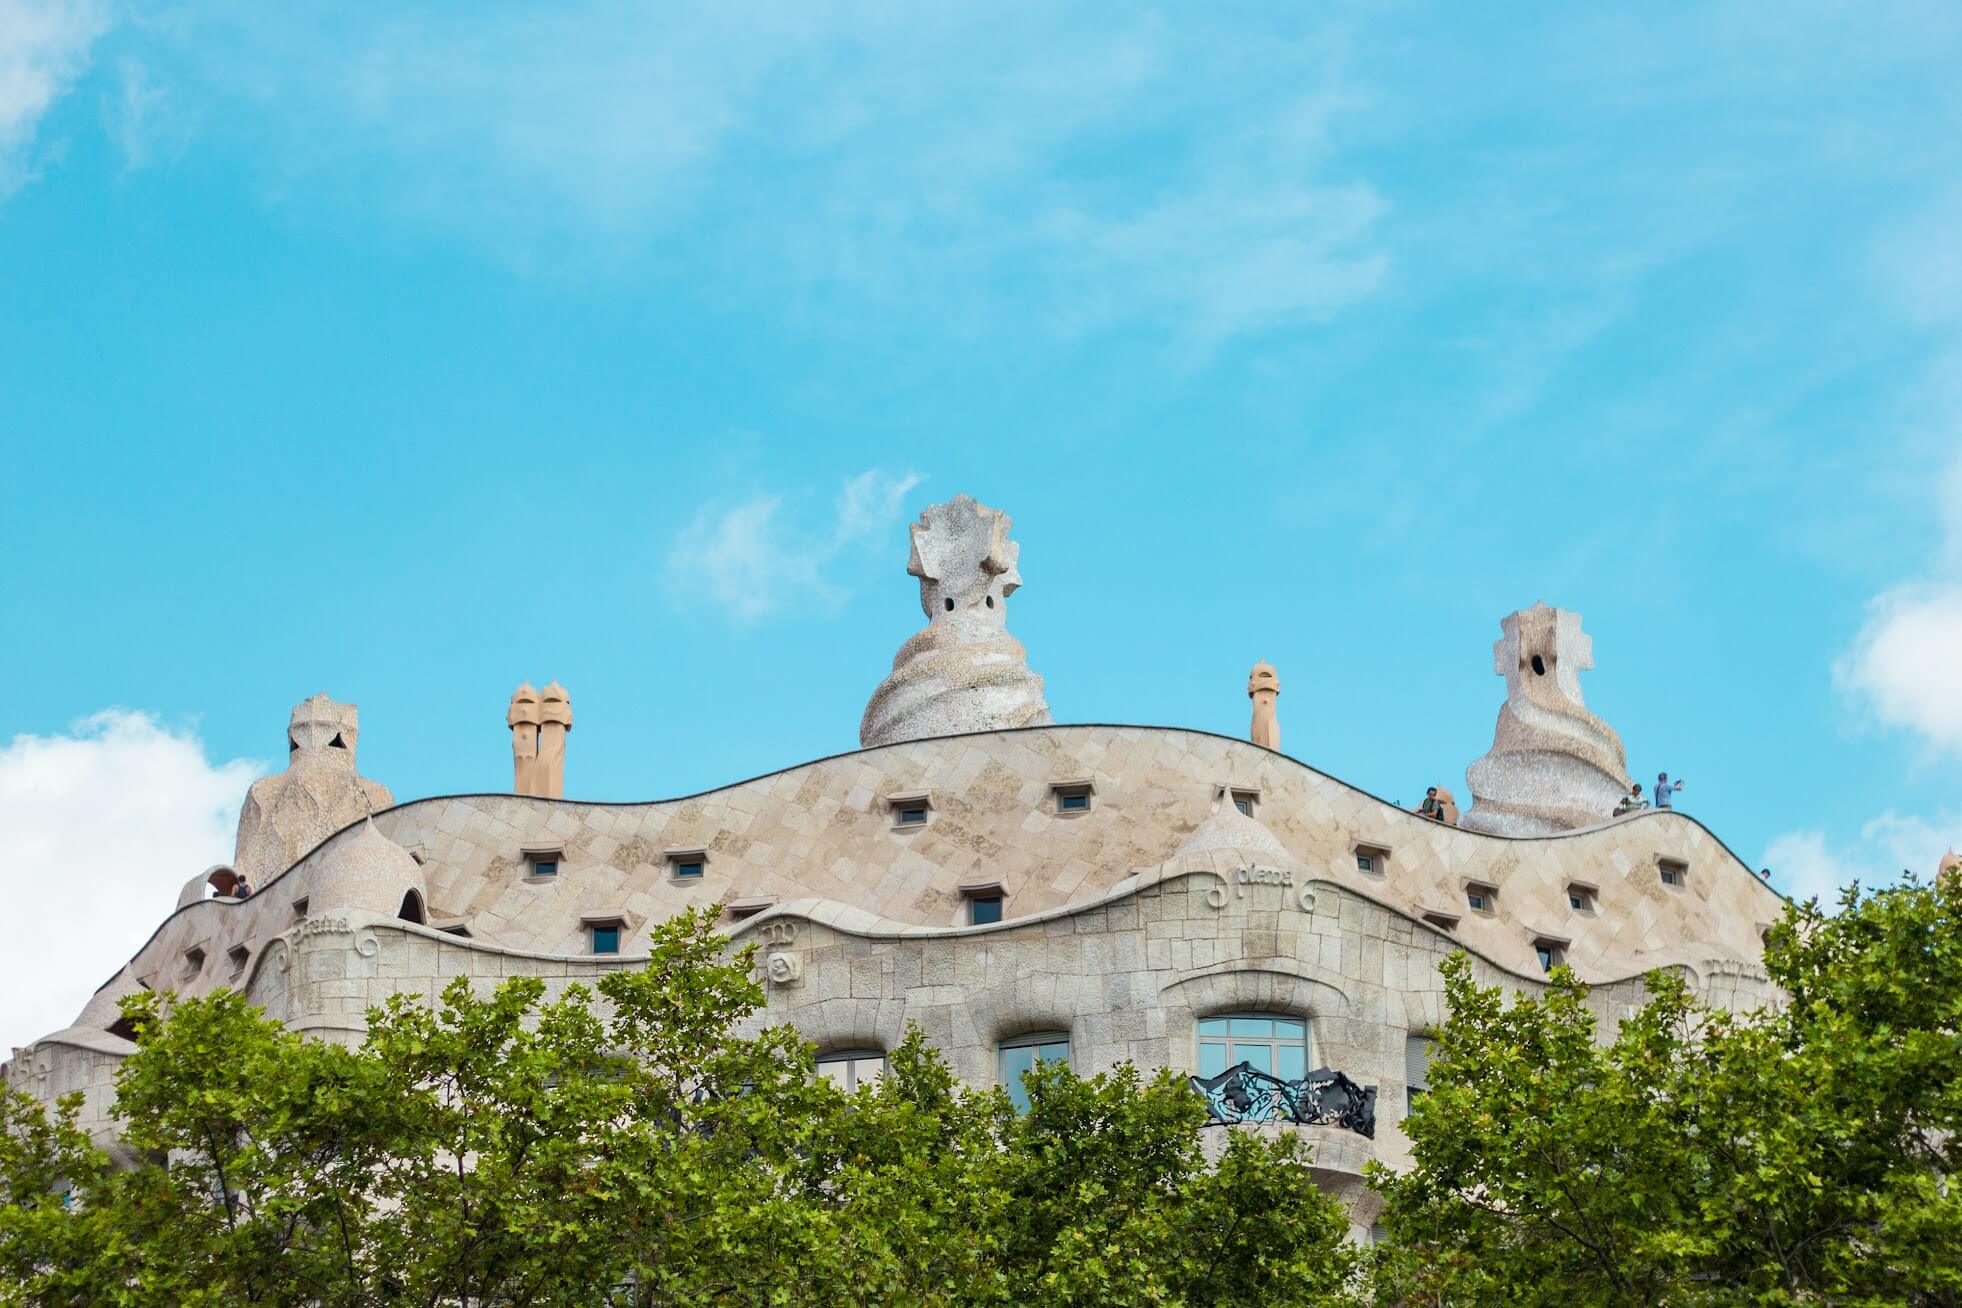 Exploring Gaudí's architecture in Barcelona - Culture tourist